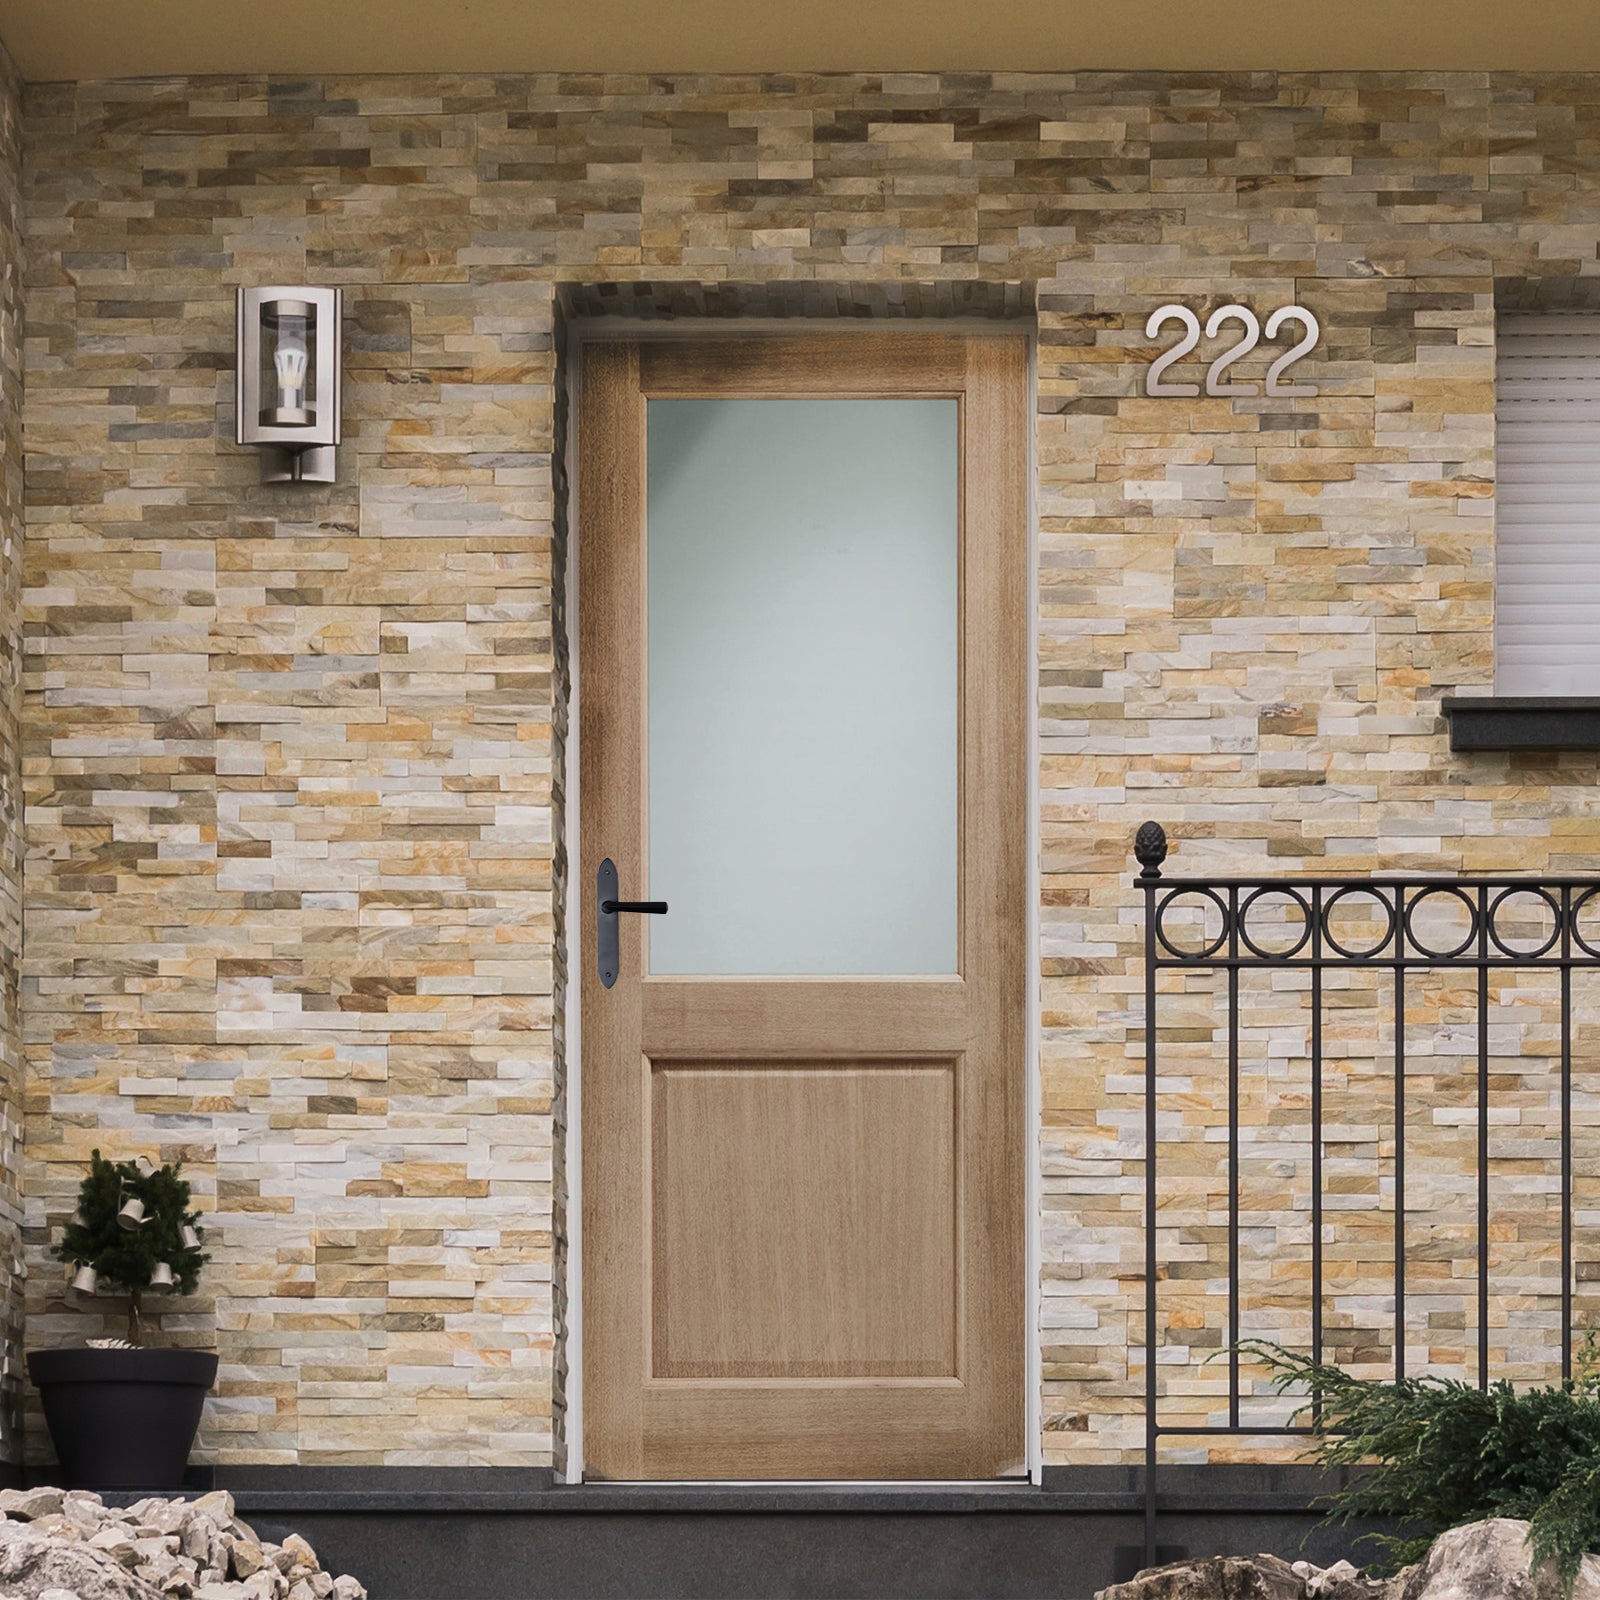 SHOW External Oak 2XG Dowelled Door with Double Glazed Clear Glass lifestyle